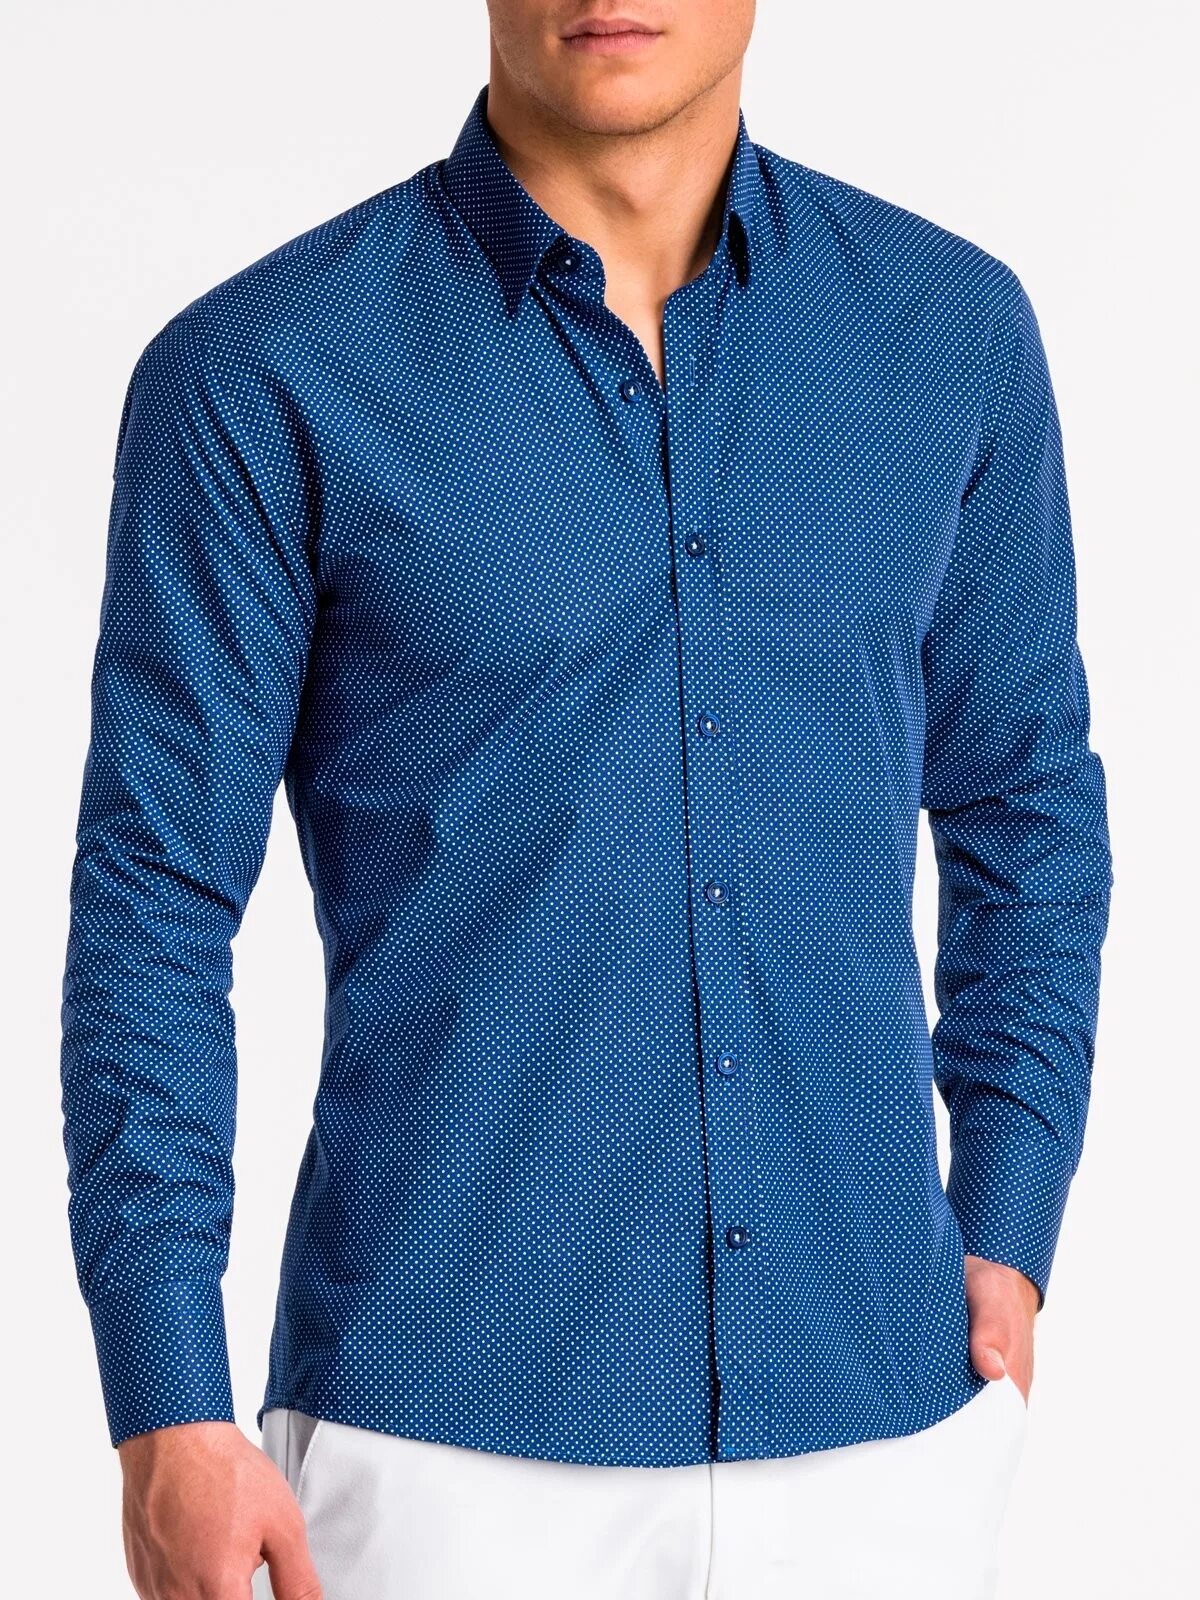 Нижняя рубашка мужская. Рубашка мужская. Синяя рубашка. Светло синяя рубашка мужская. Сорочка мужская синяя.